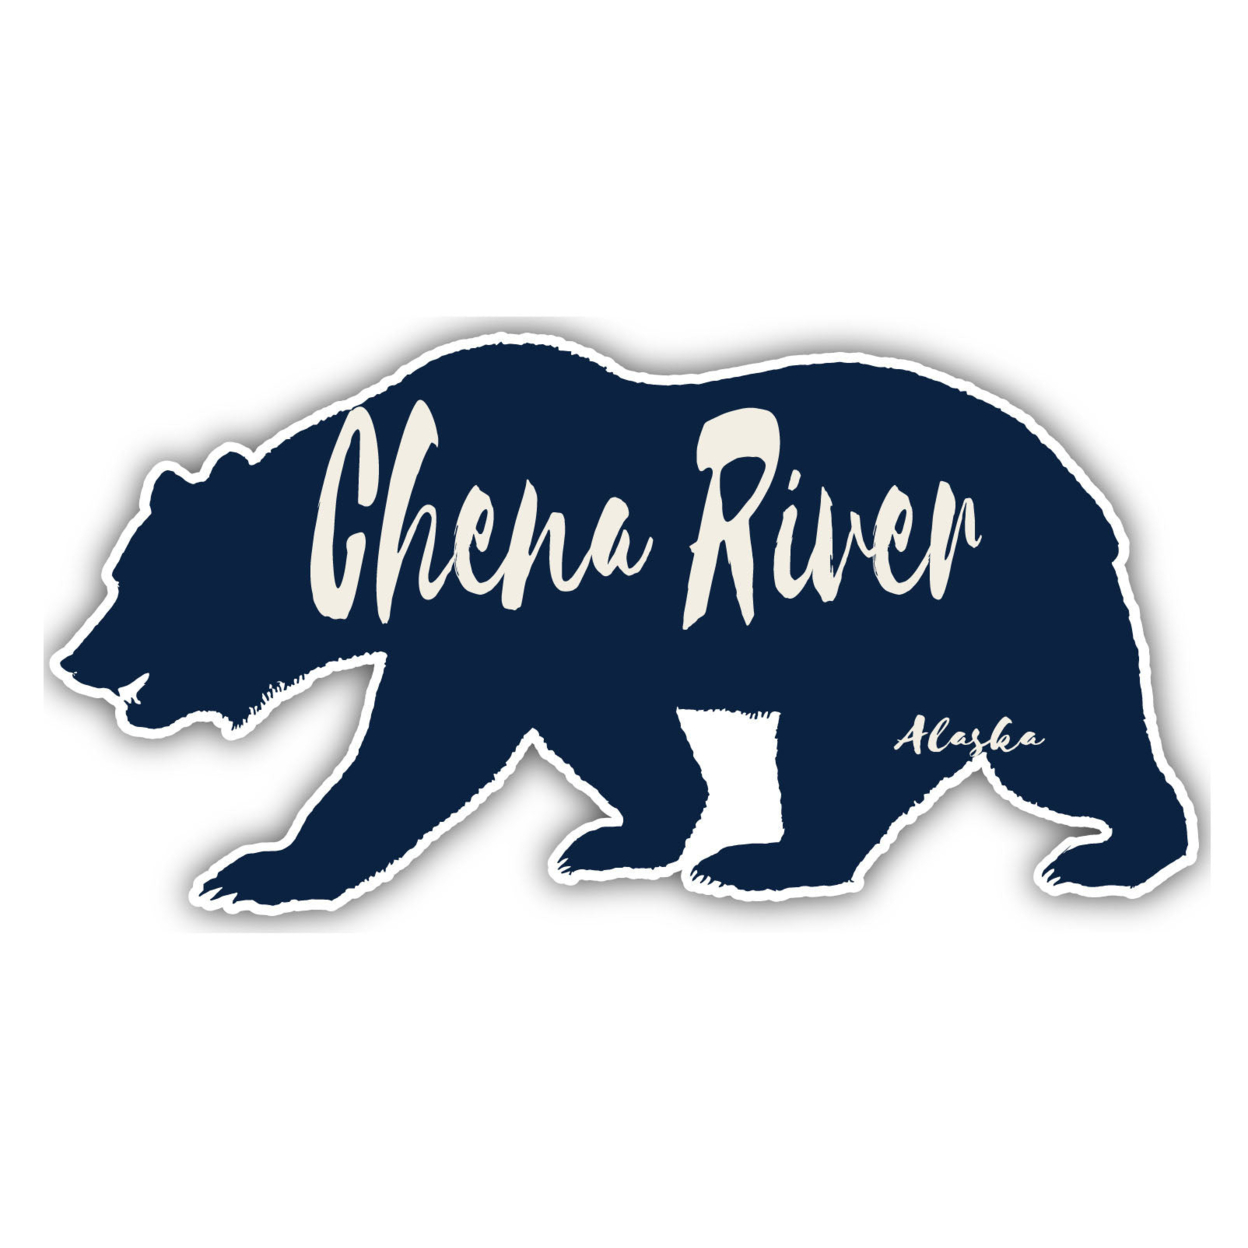 Chena River Alaska Souvenir Decorative Stickers (Choose Theme And Size) - Single Unit, 6-Inch, Bear